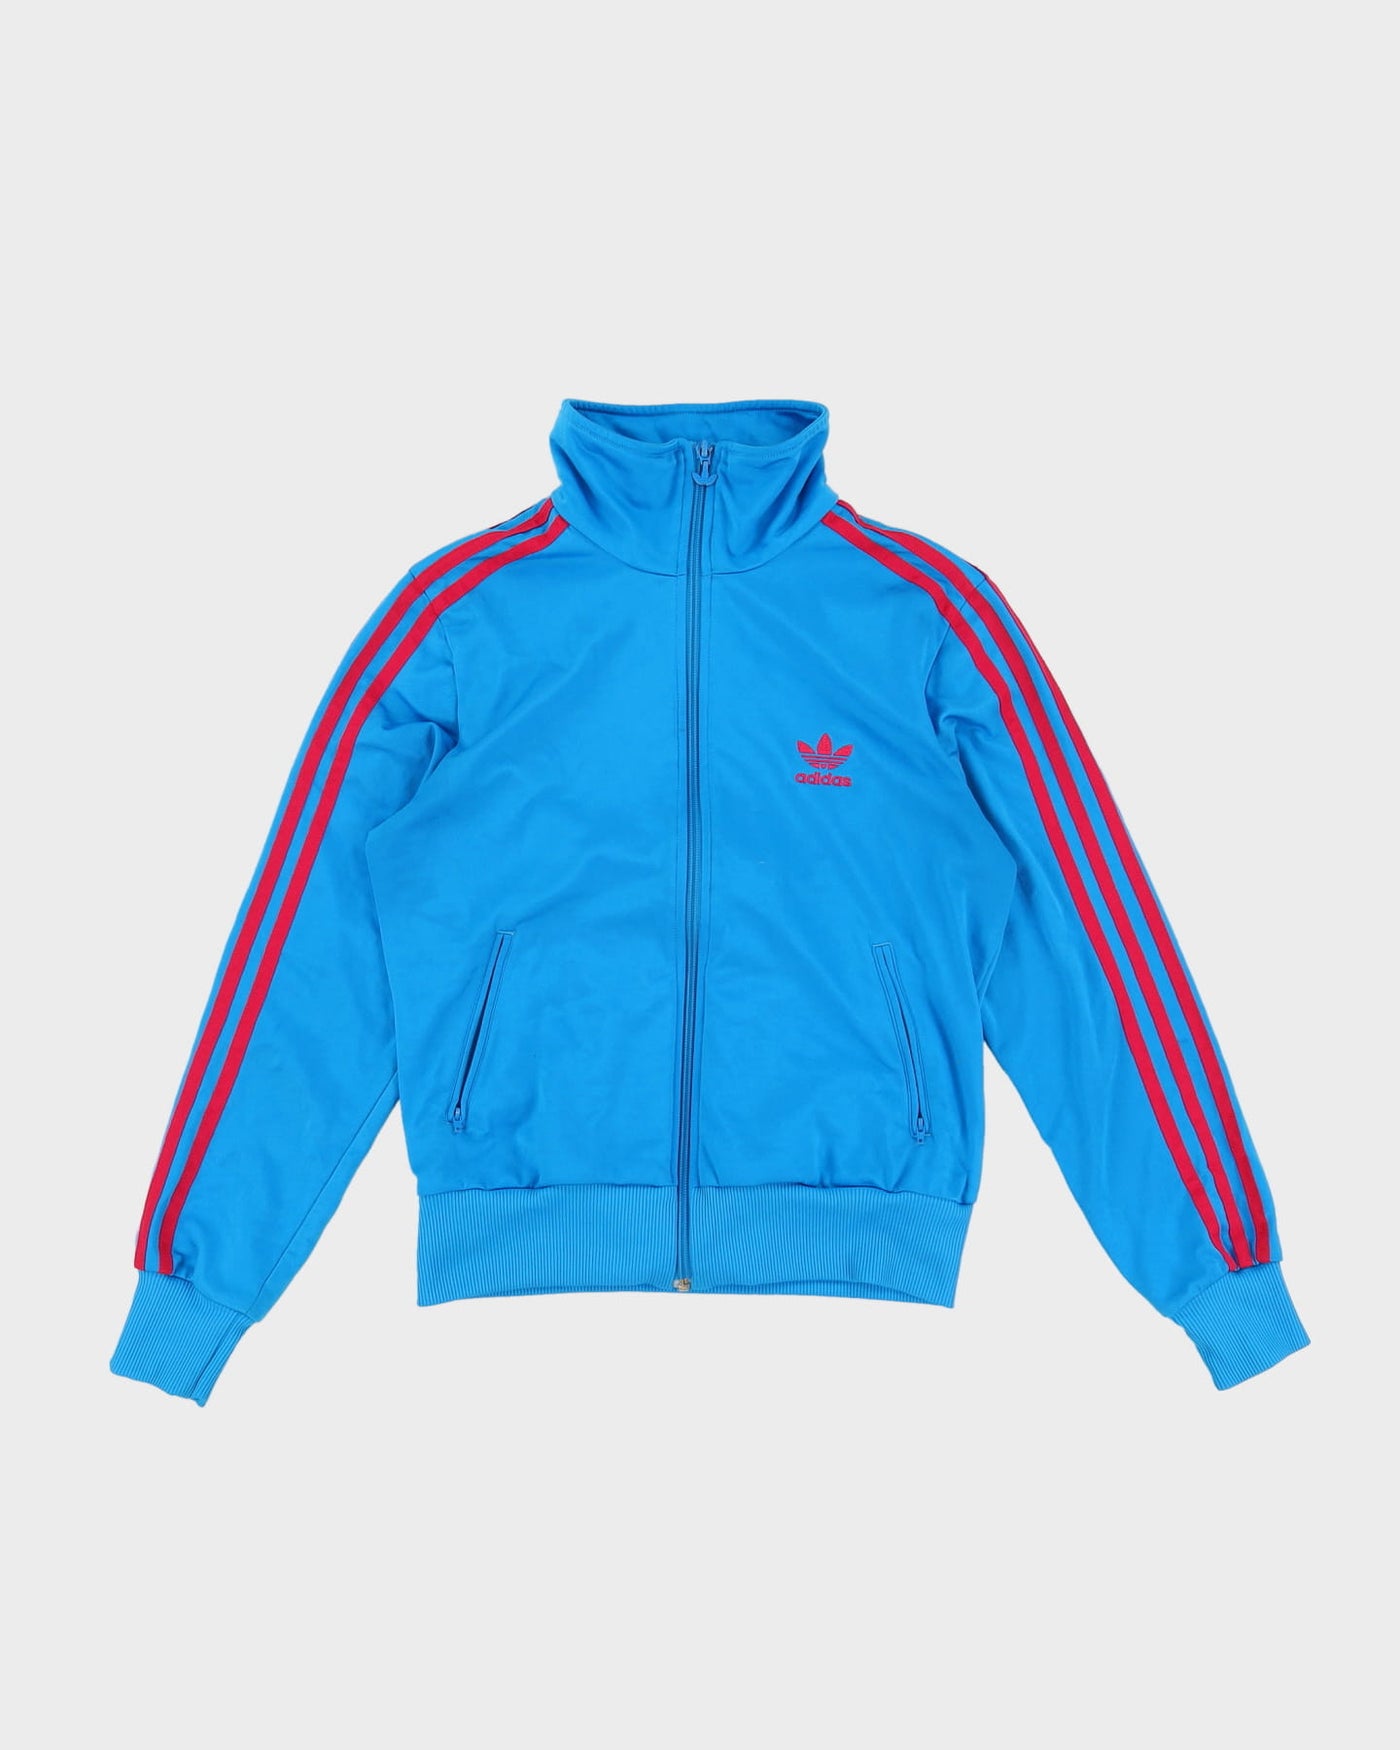 Adidas Blue / Pink Track Jacket - M